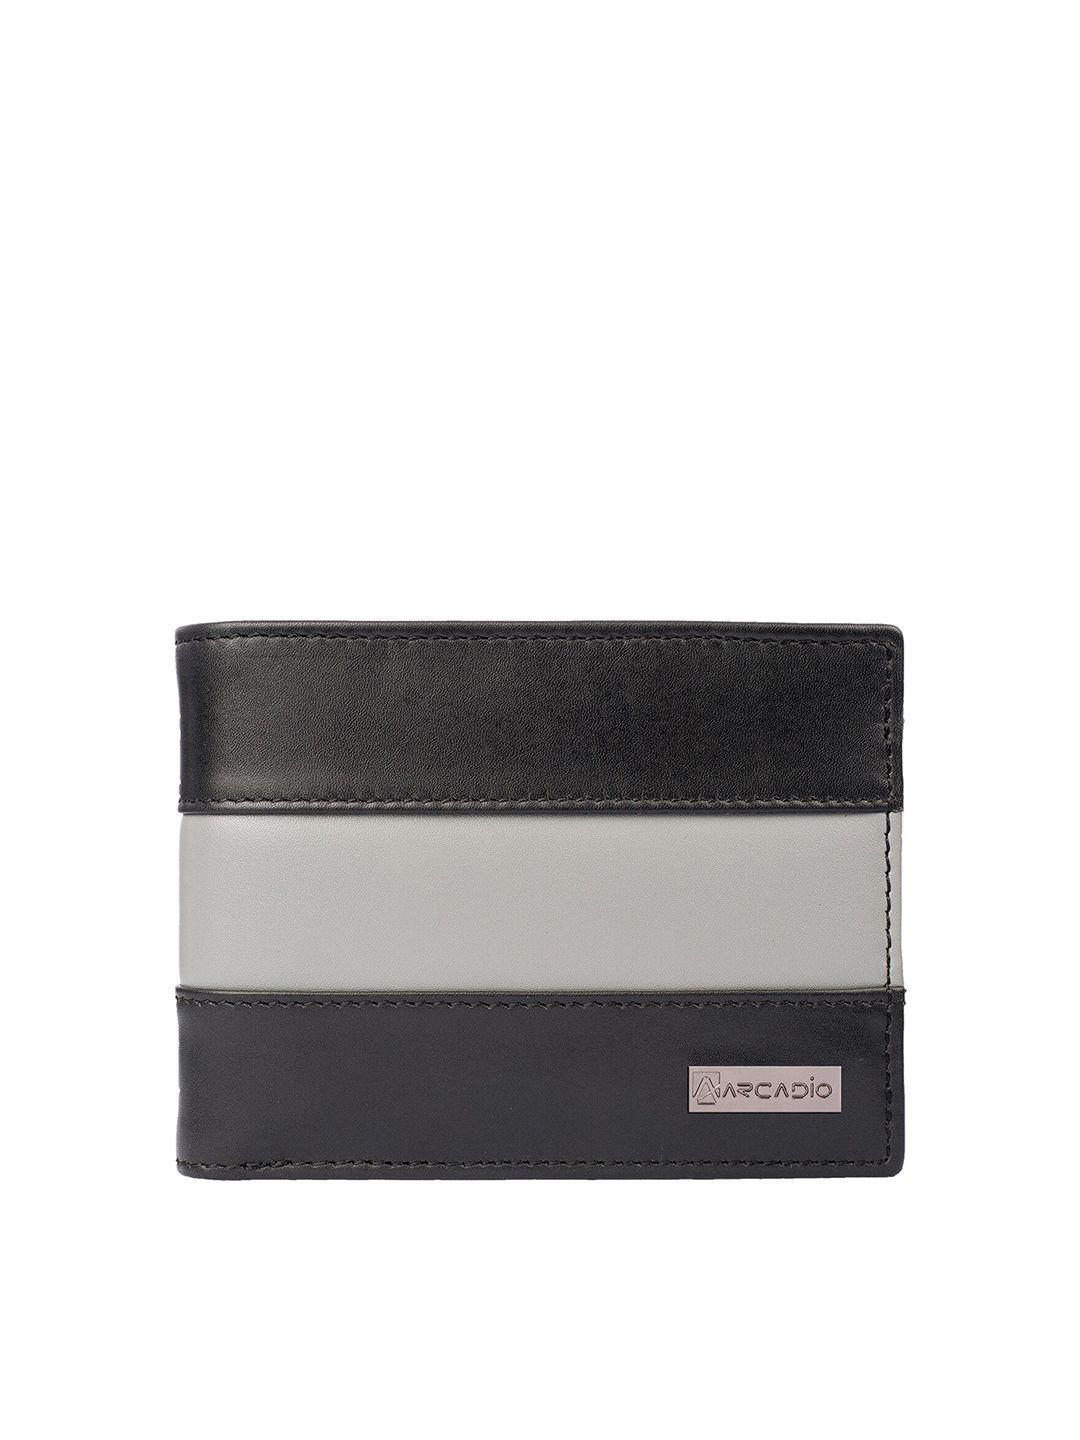 arcadio men black & grey striped leather two fold wallet